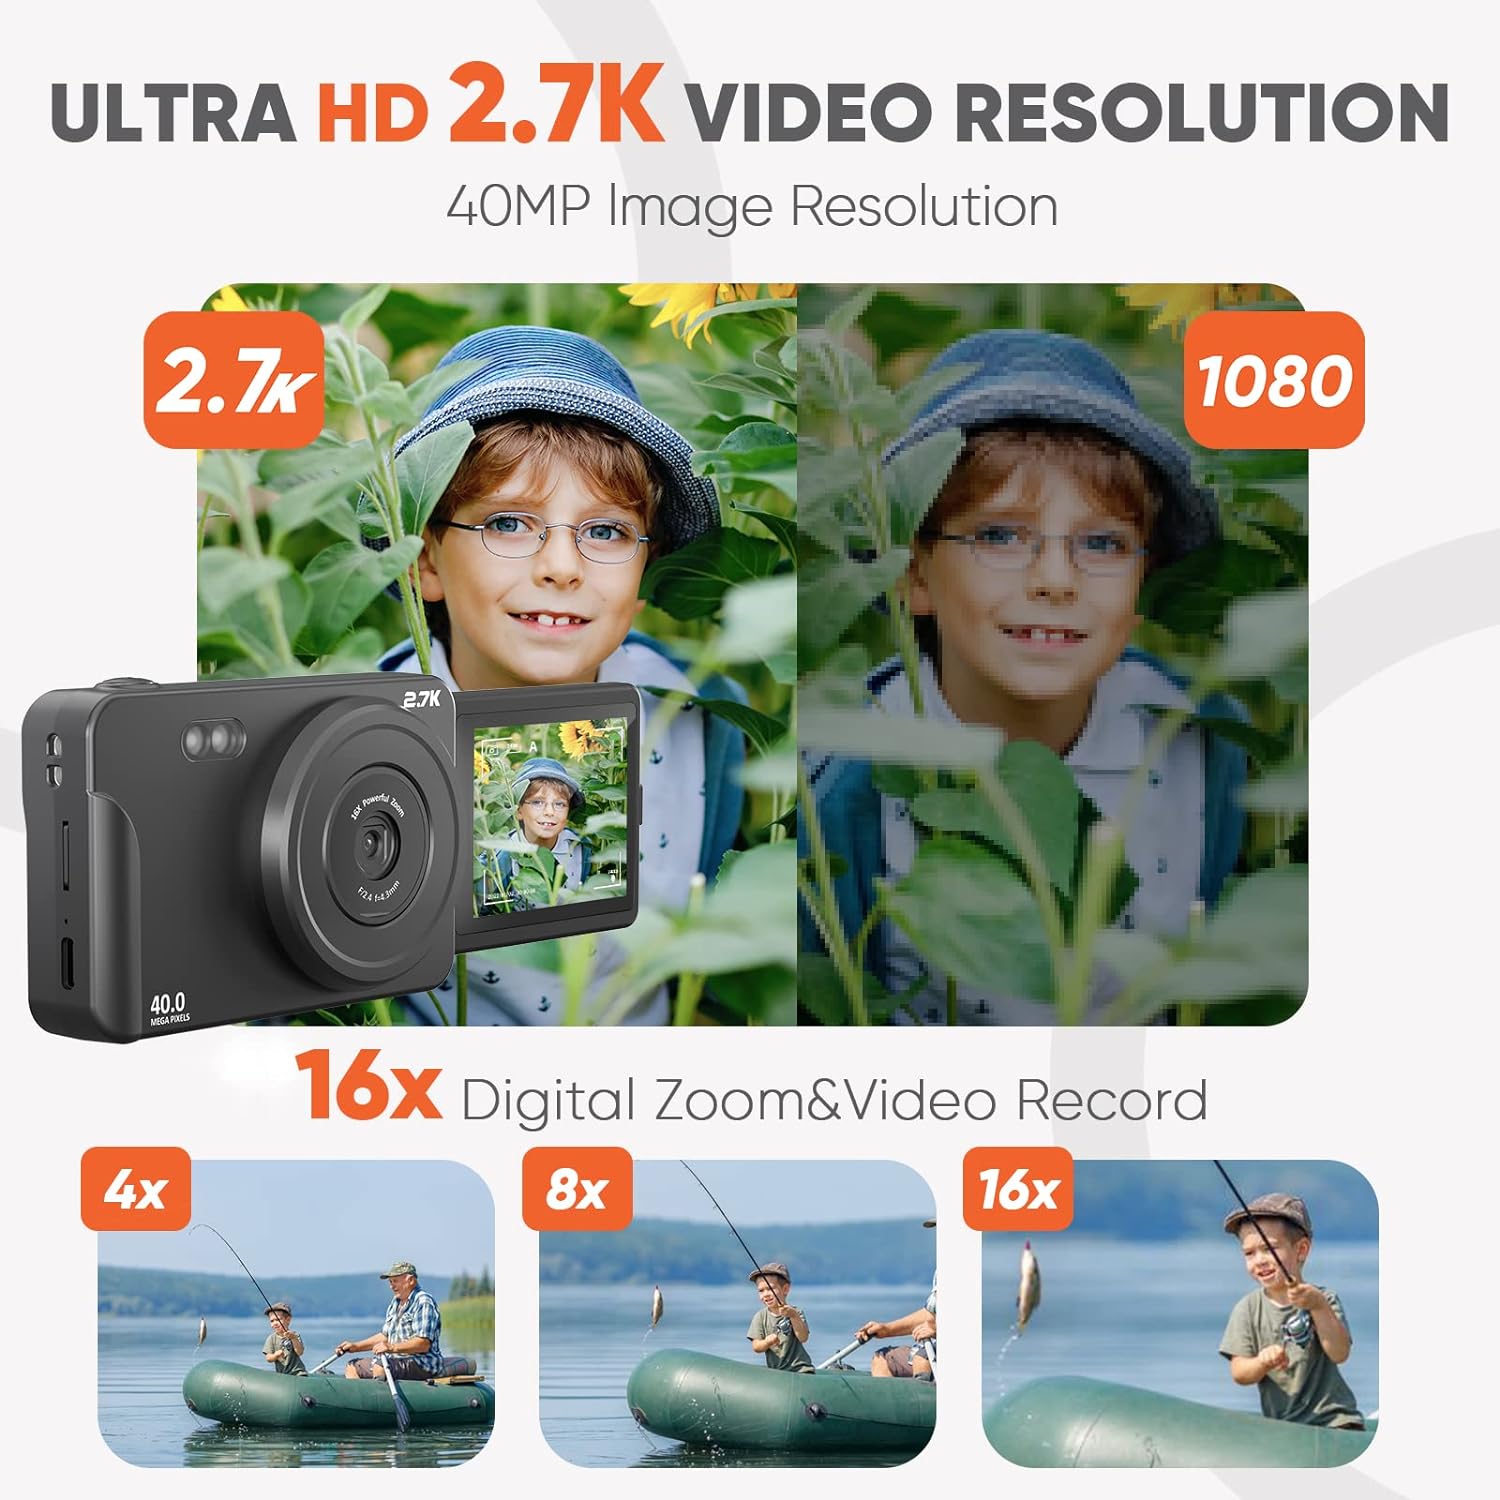 ESOXOFFORE Digital Camera for Teens - $30